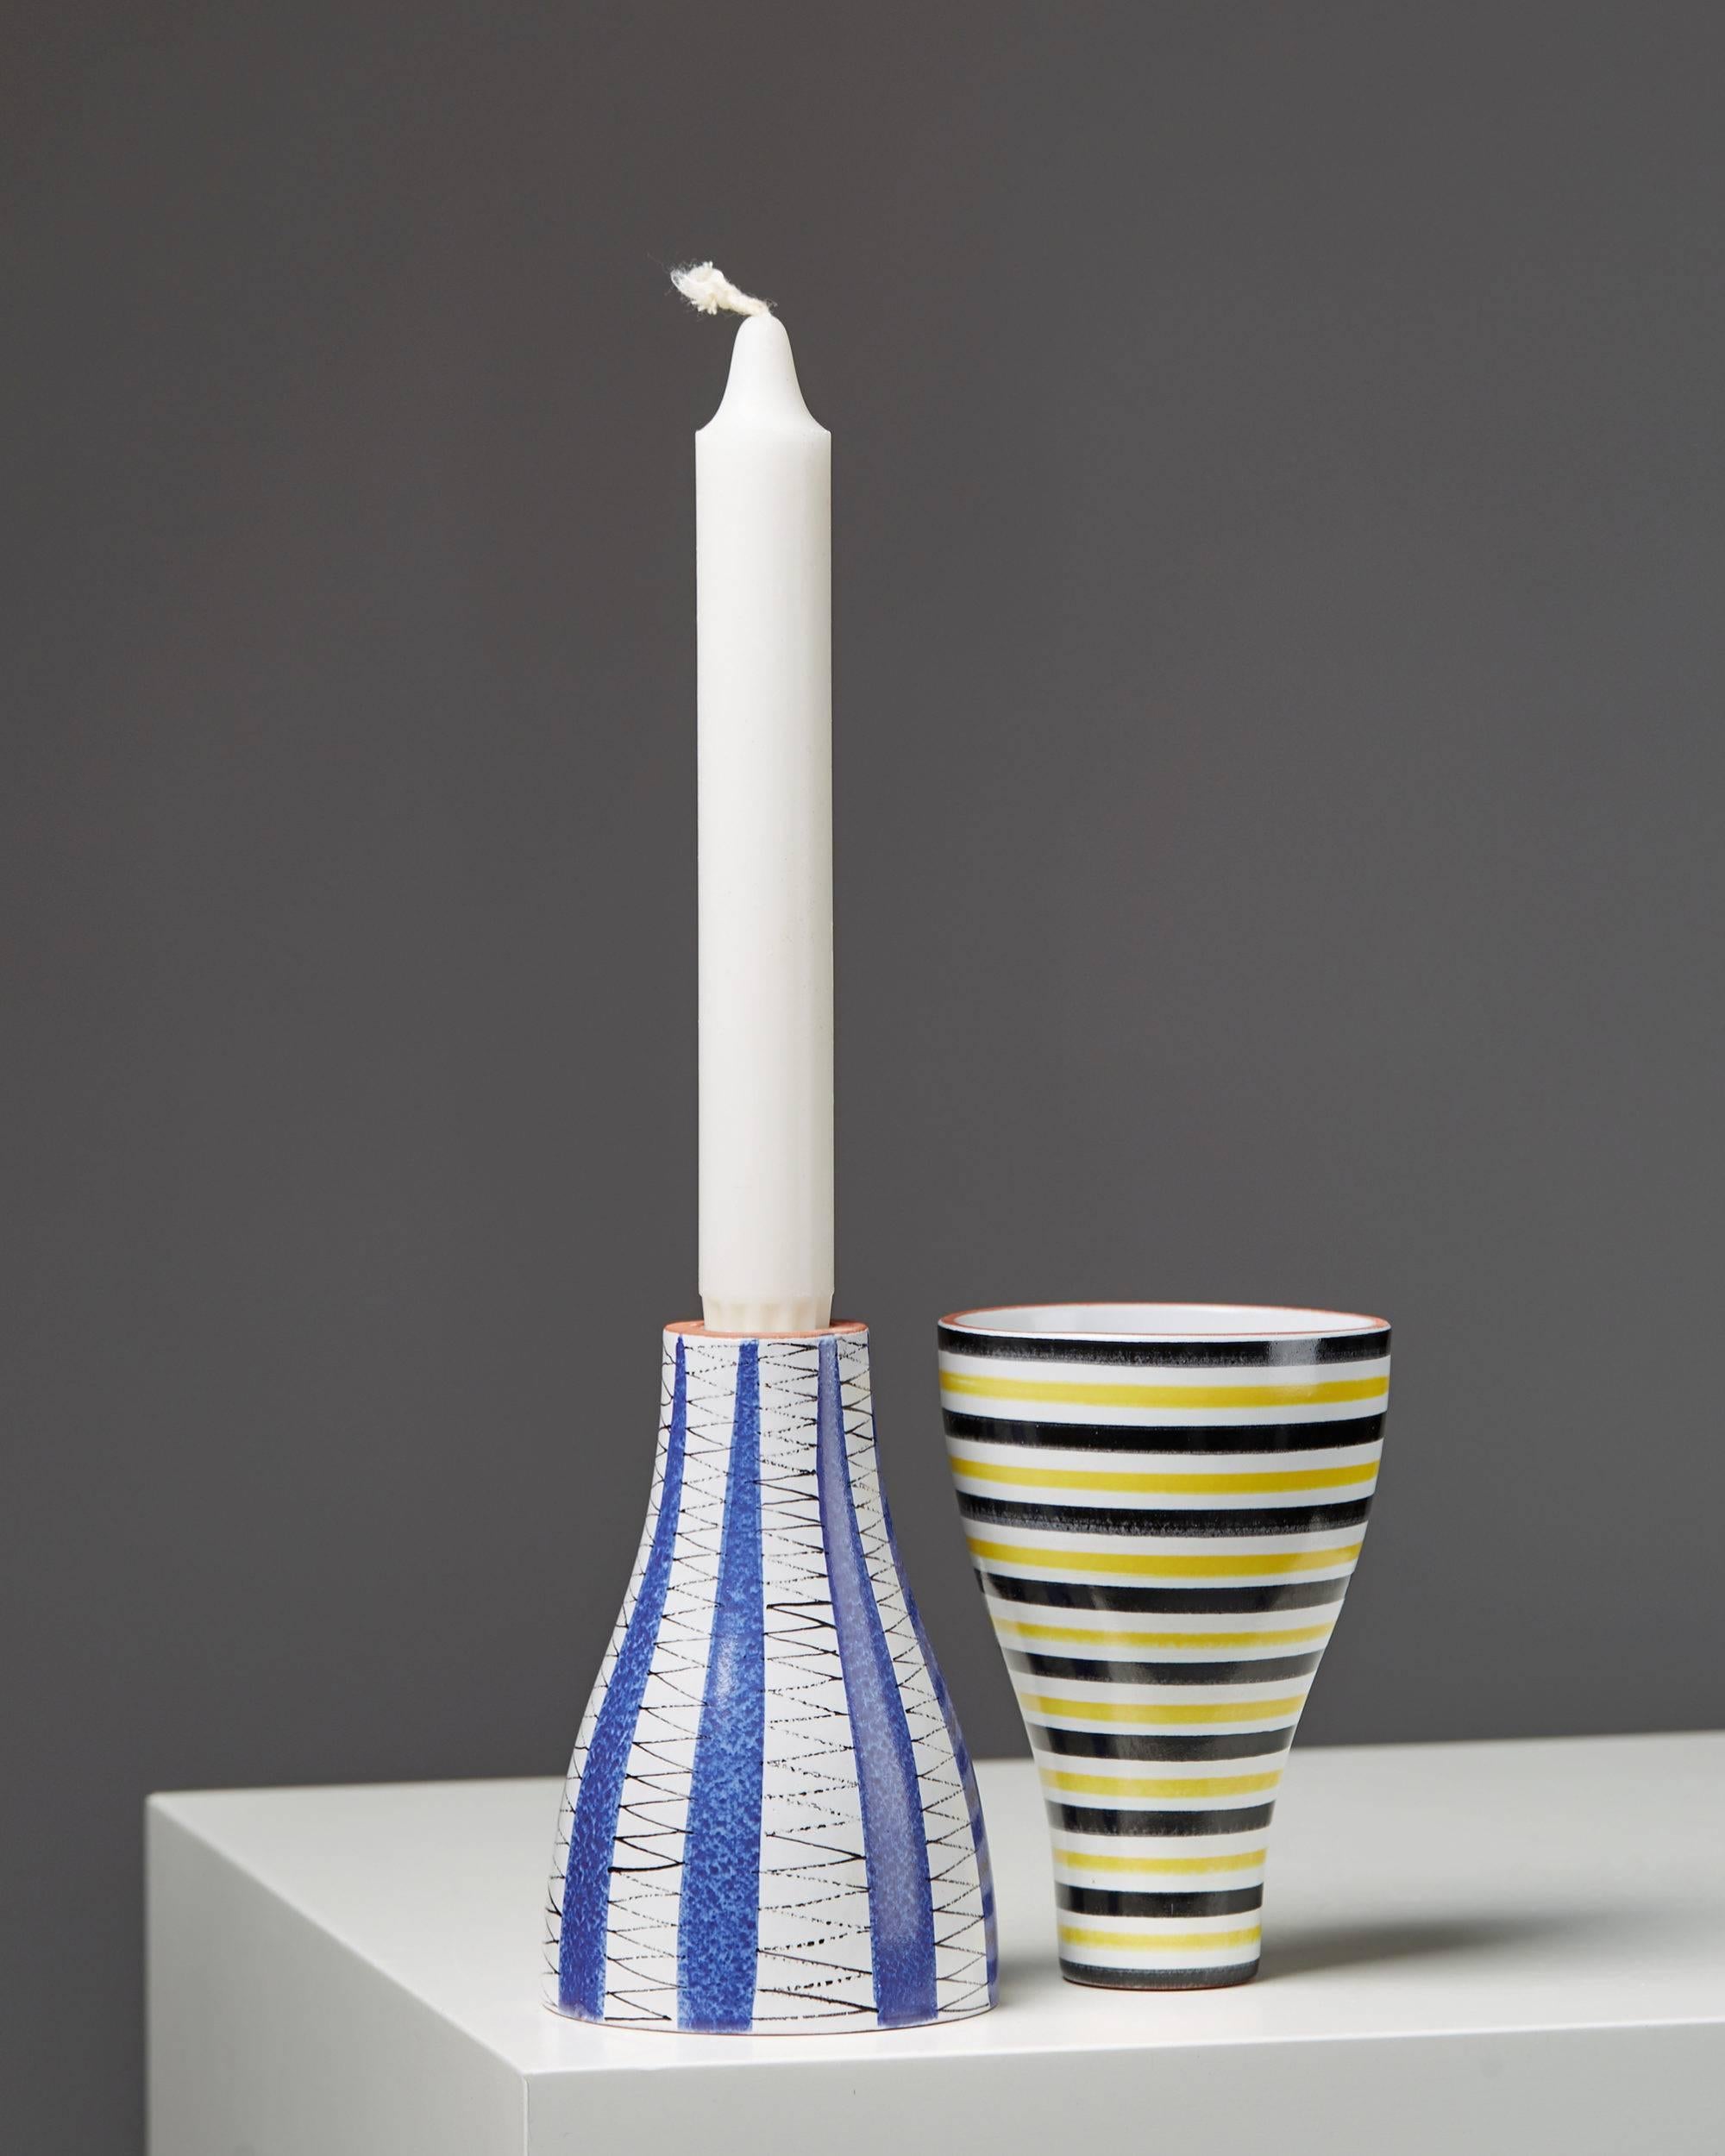 Pair of vases/ candlesticks designed by Stig Lindberg for Gustavsberg, Sweden, 1950s.

Measure: H 12 cm/ 4 3/4''.